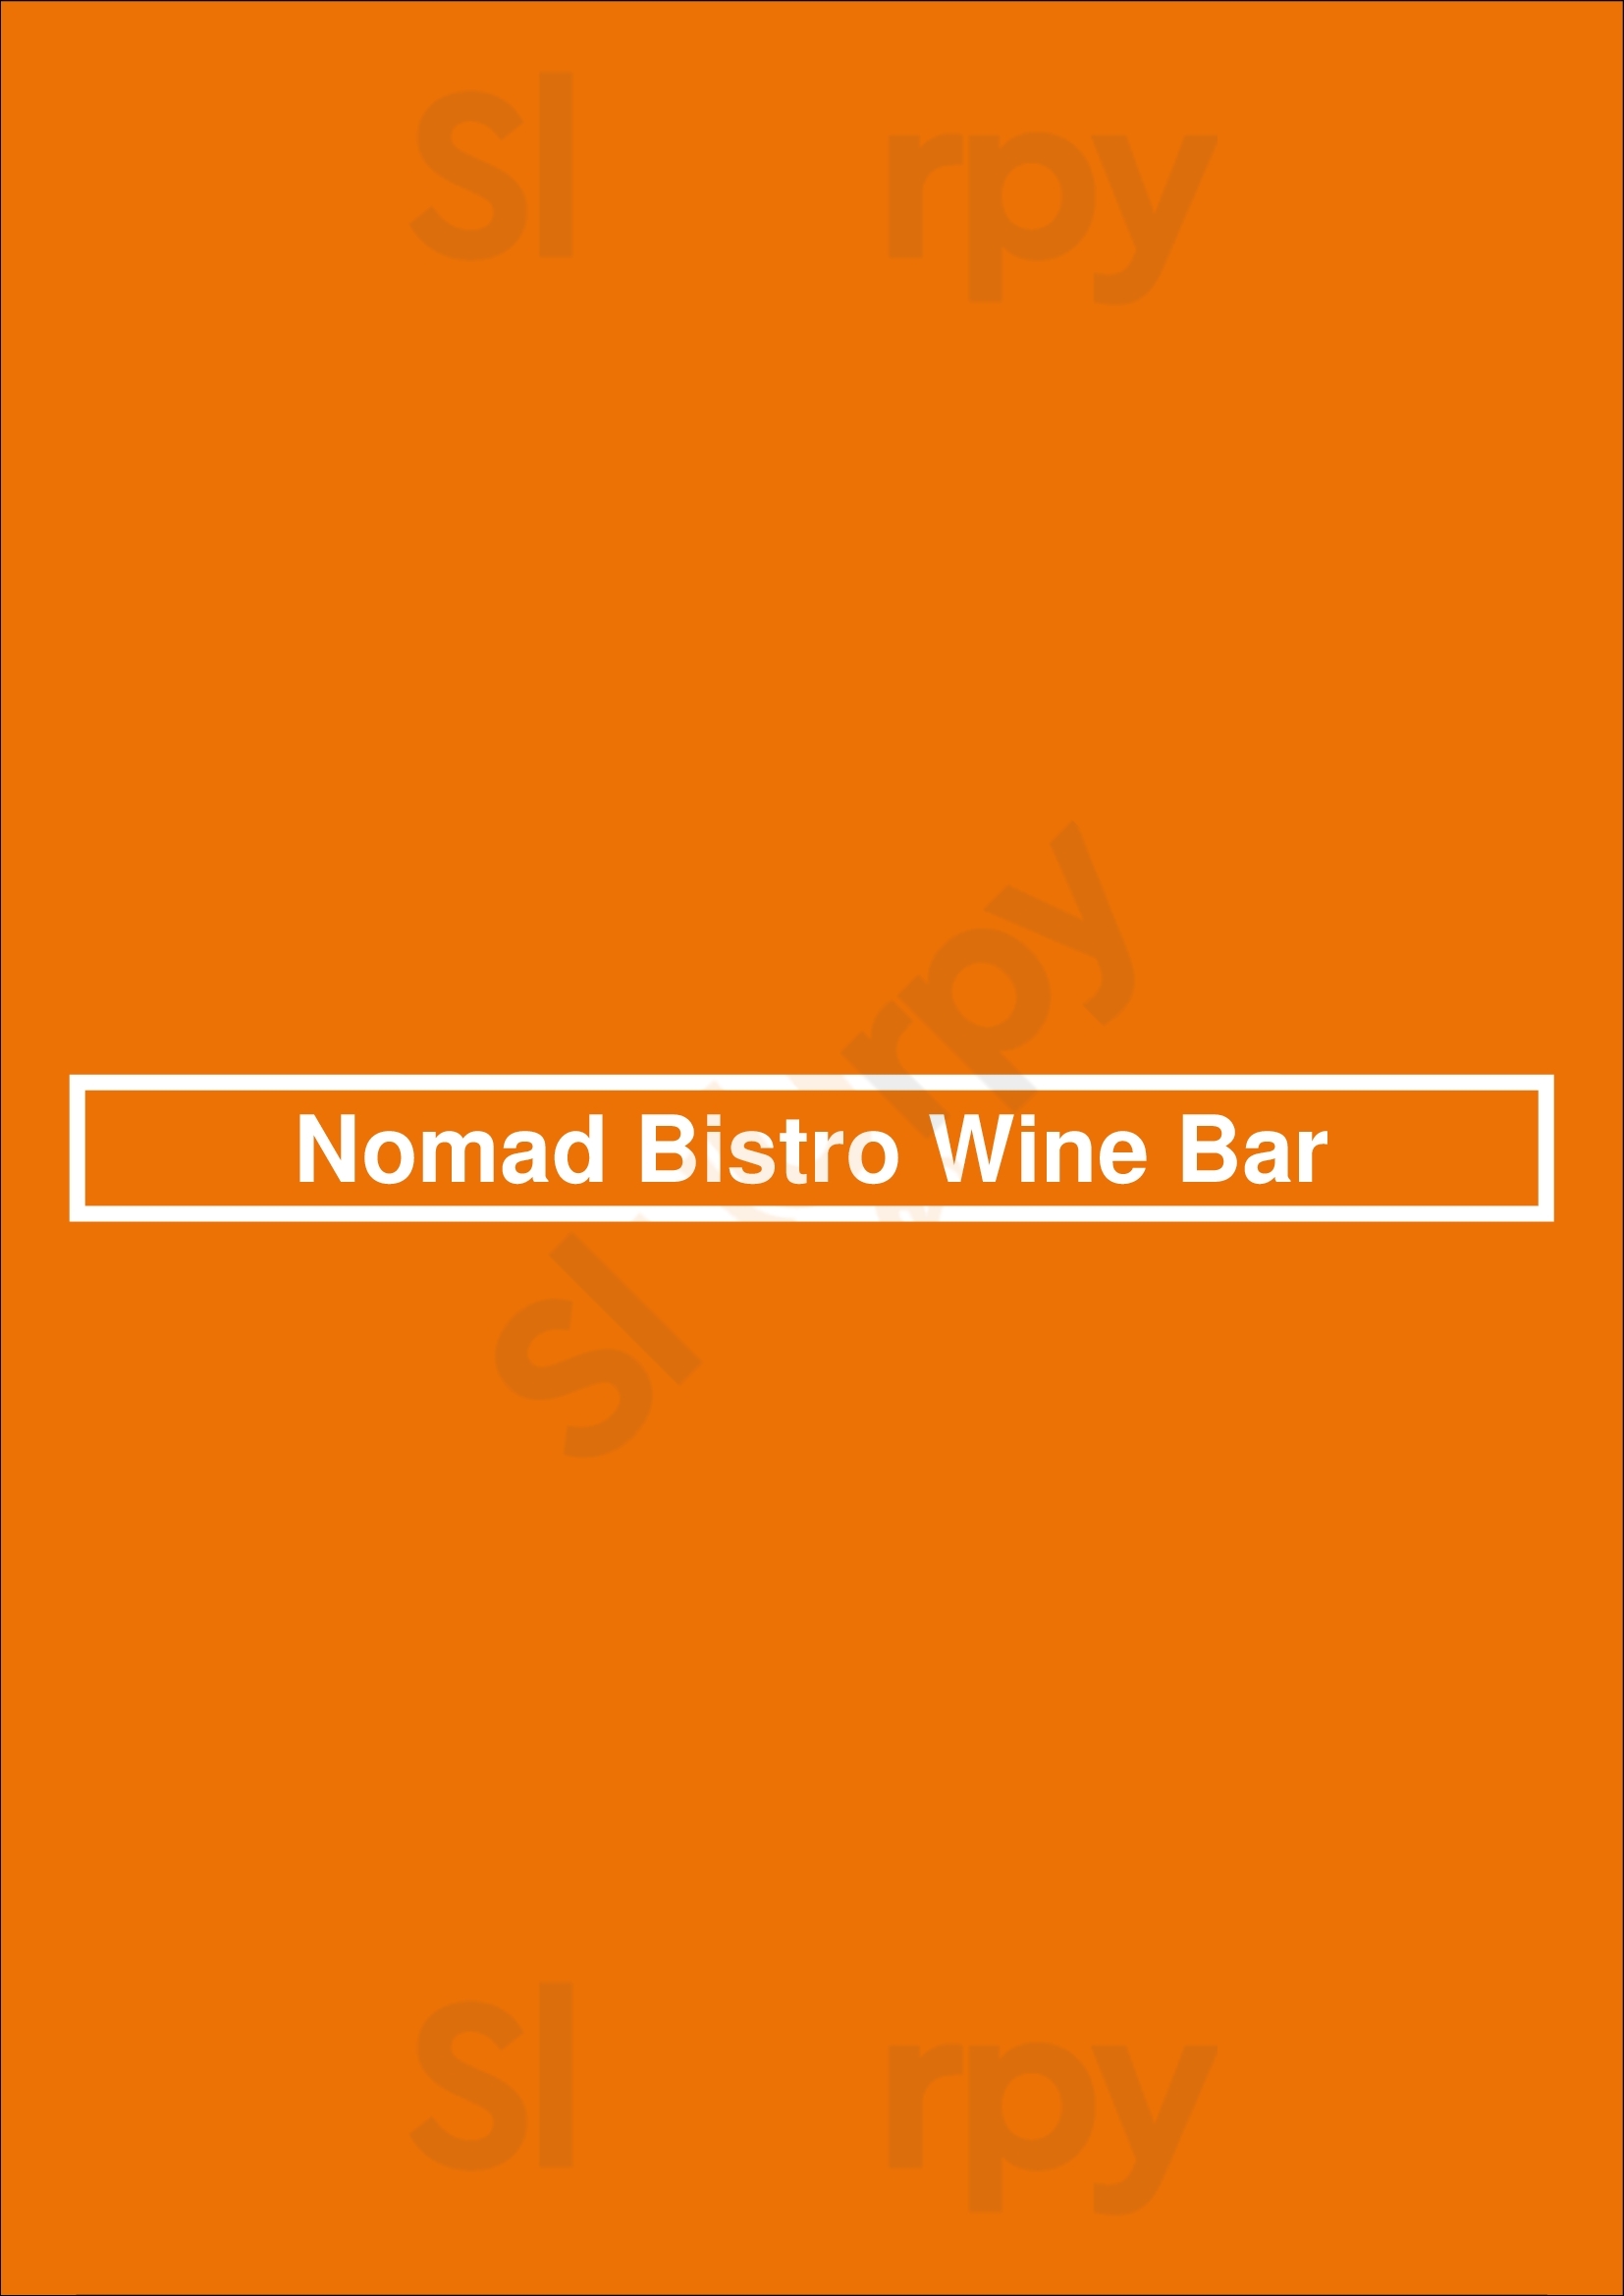 Nomad Bistro Wine Bar Den Haag Menu - 1